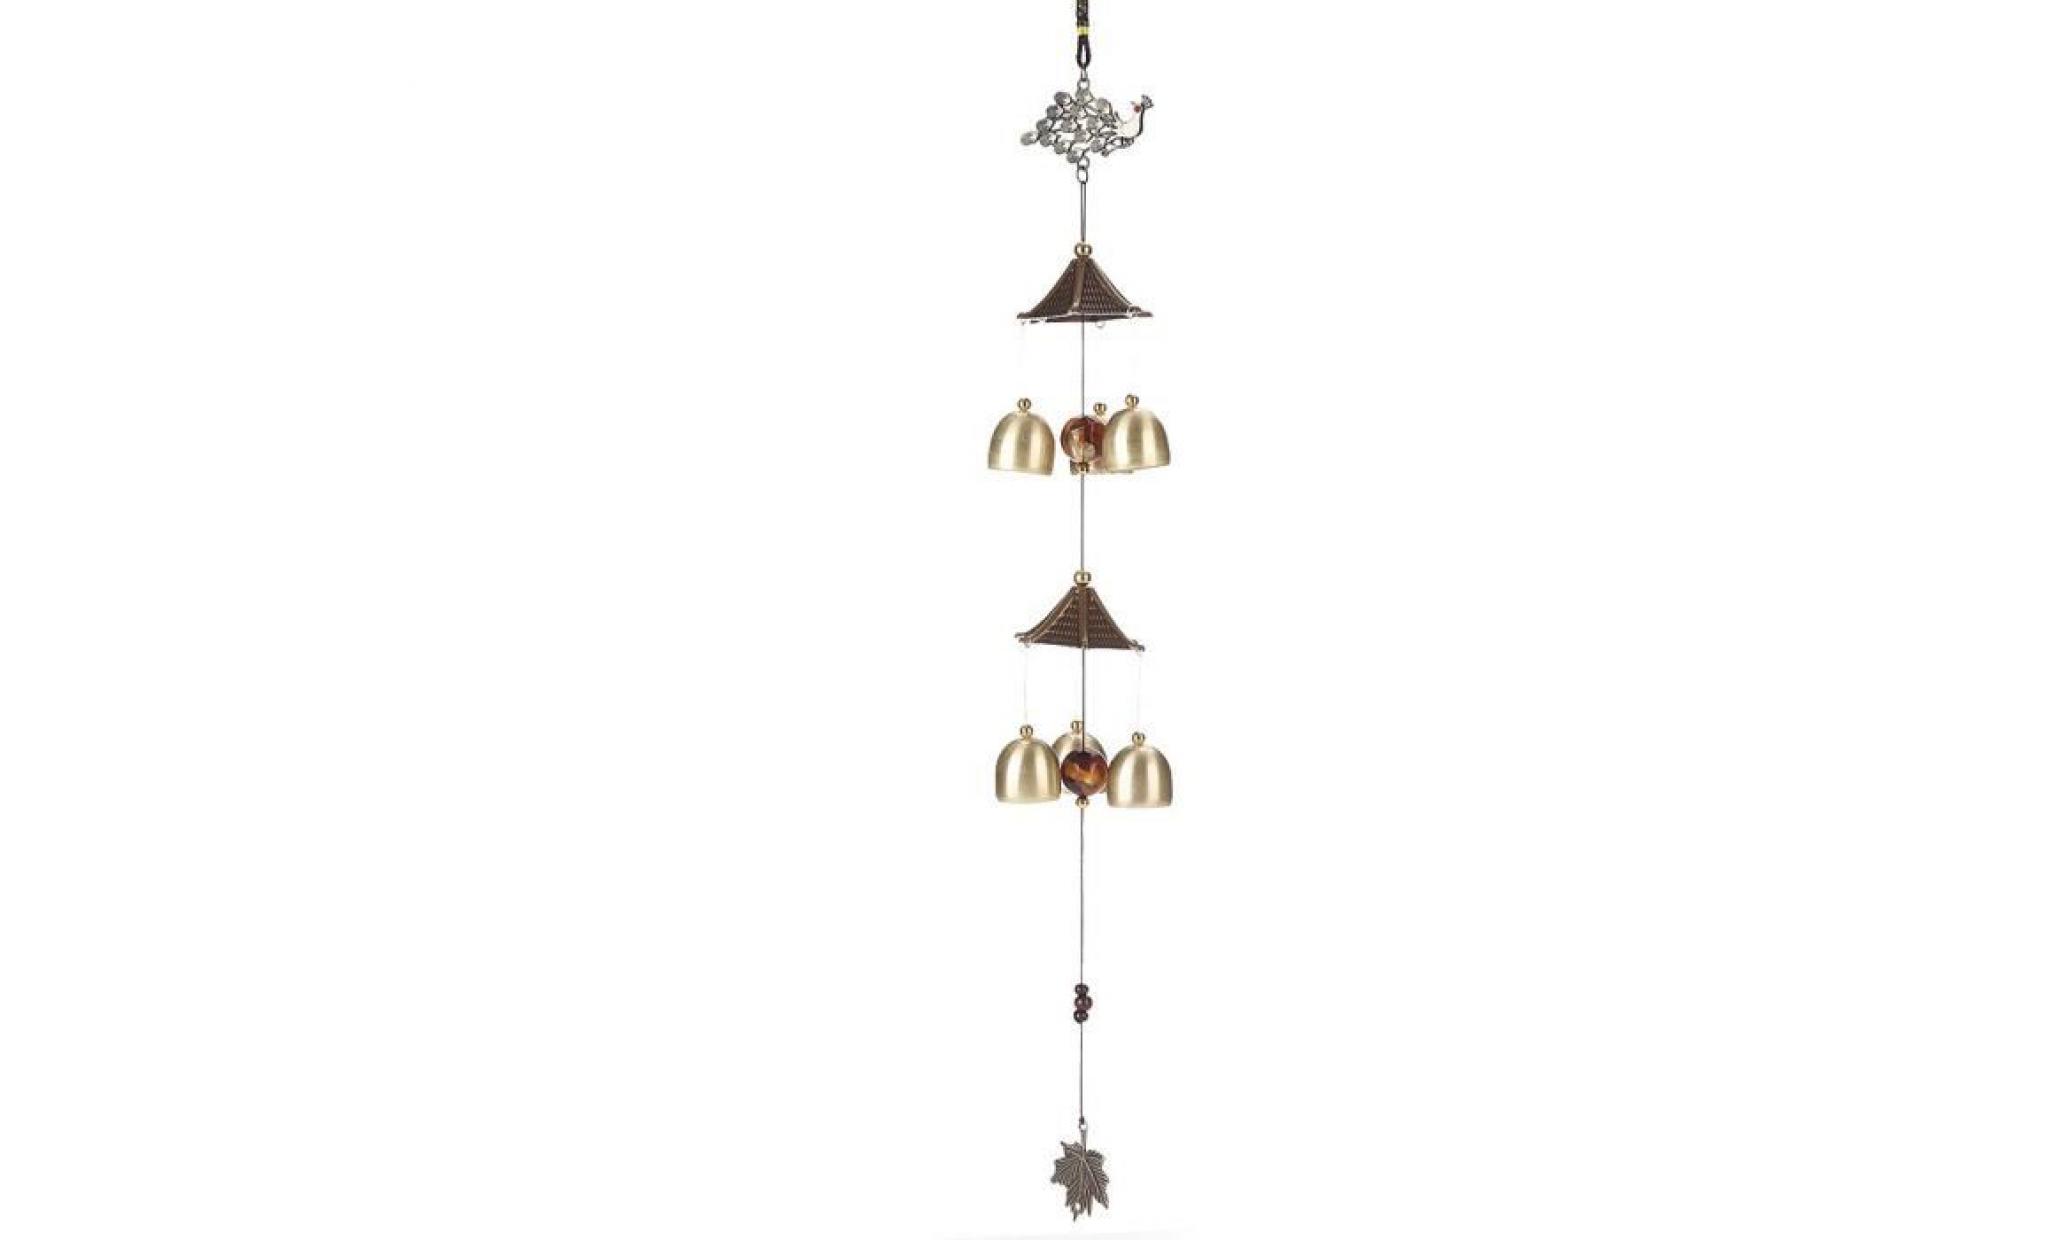 amazing carillon grace collection grand son couleur bronze cloches vent carillons   cff70326401b